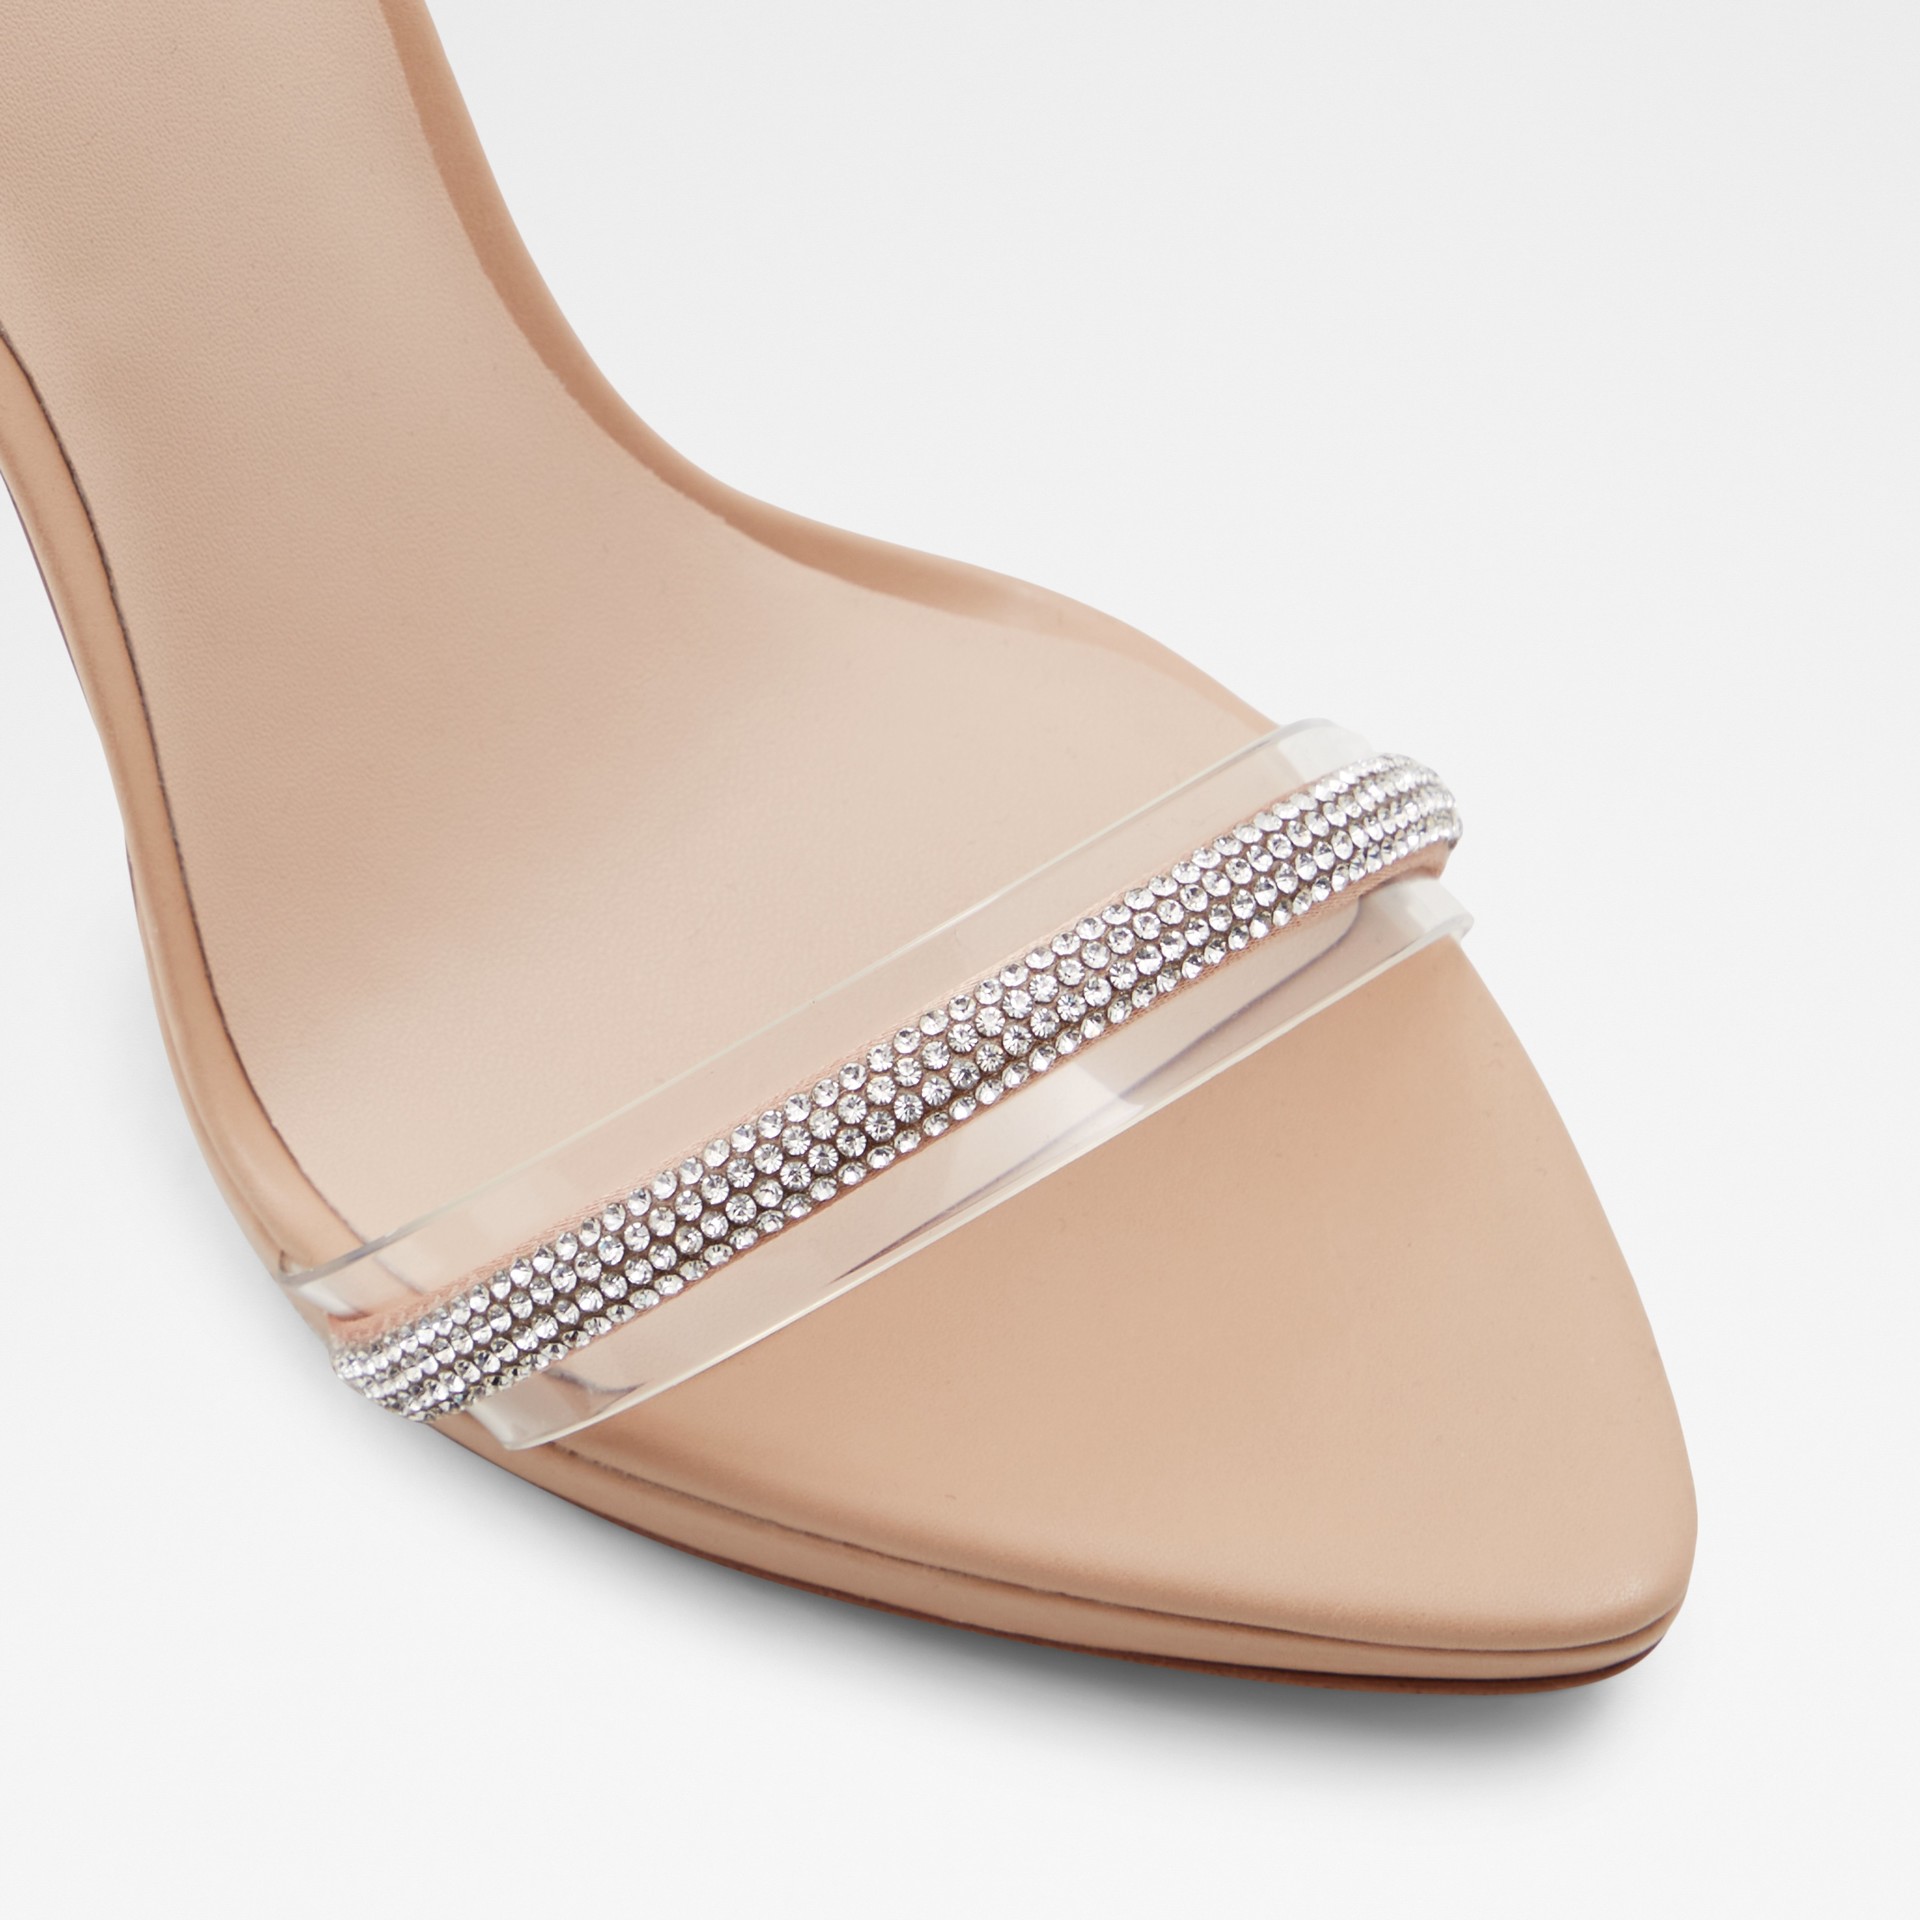 Sandalias para mujer beige THIRAKIN 270002029 | ALDO Shoes España